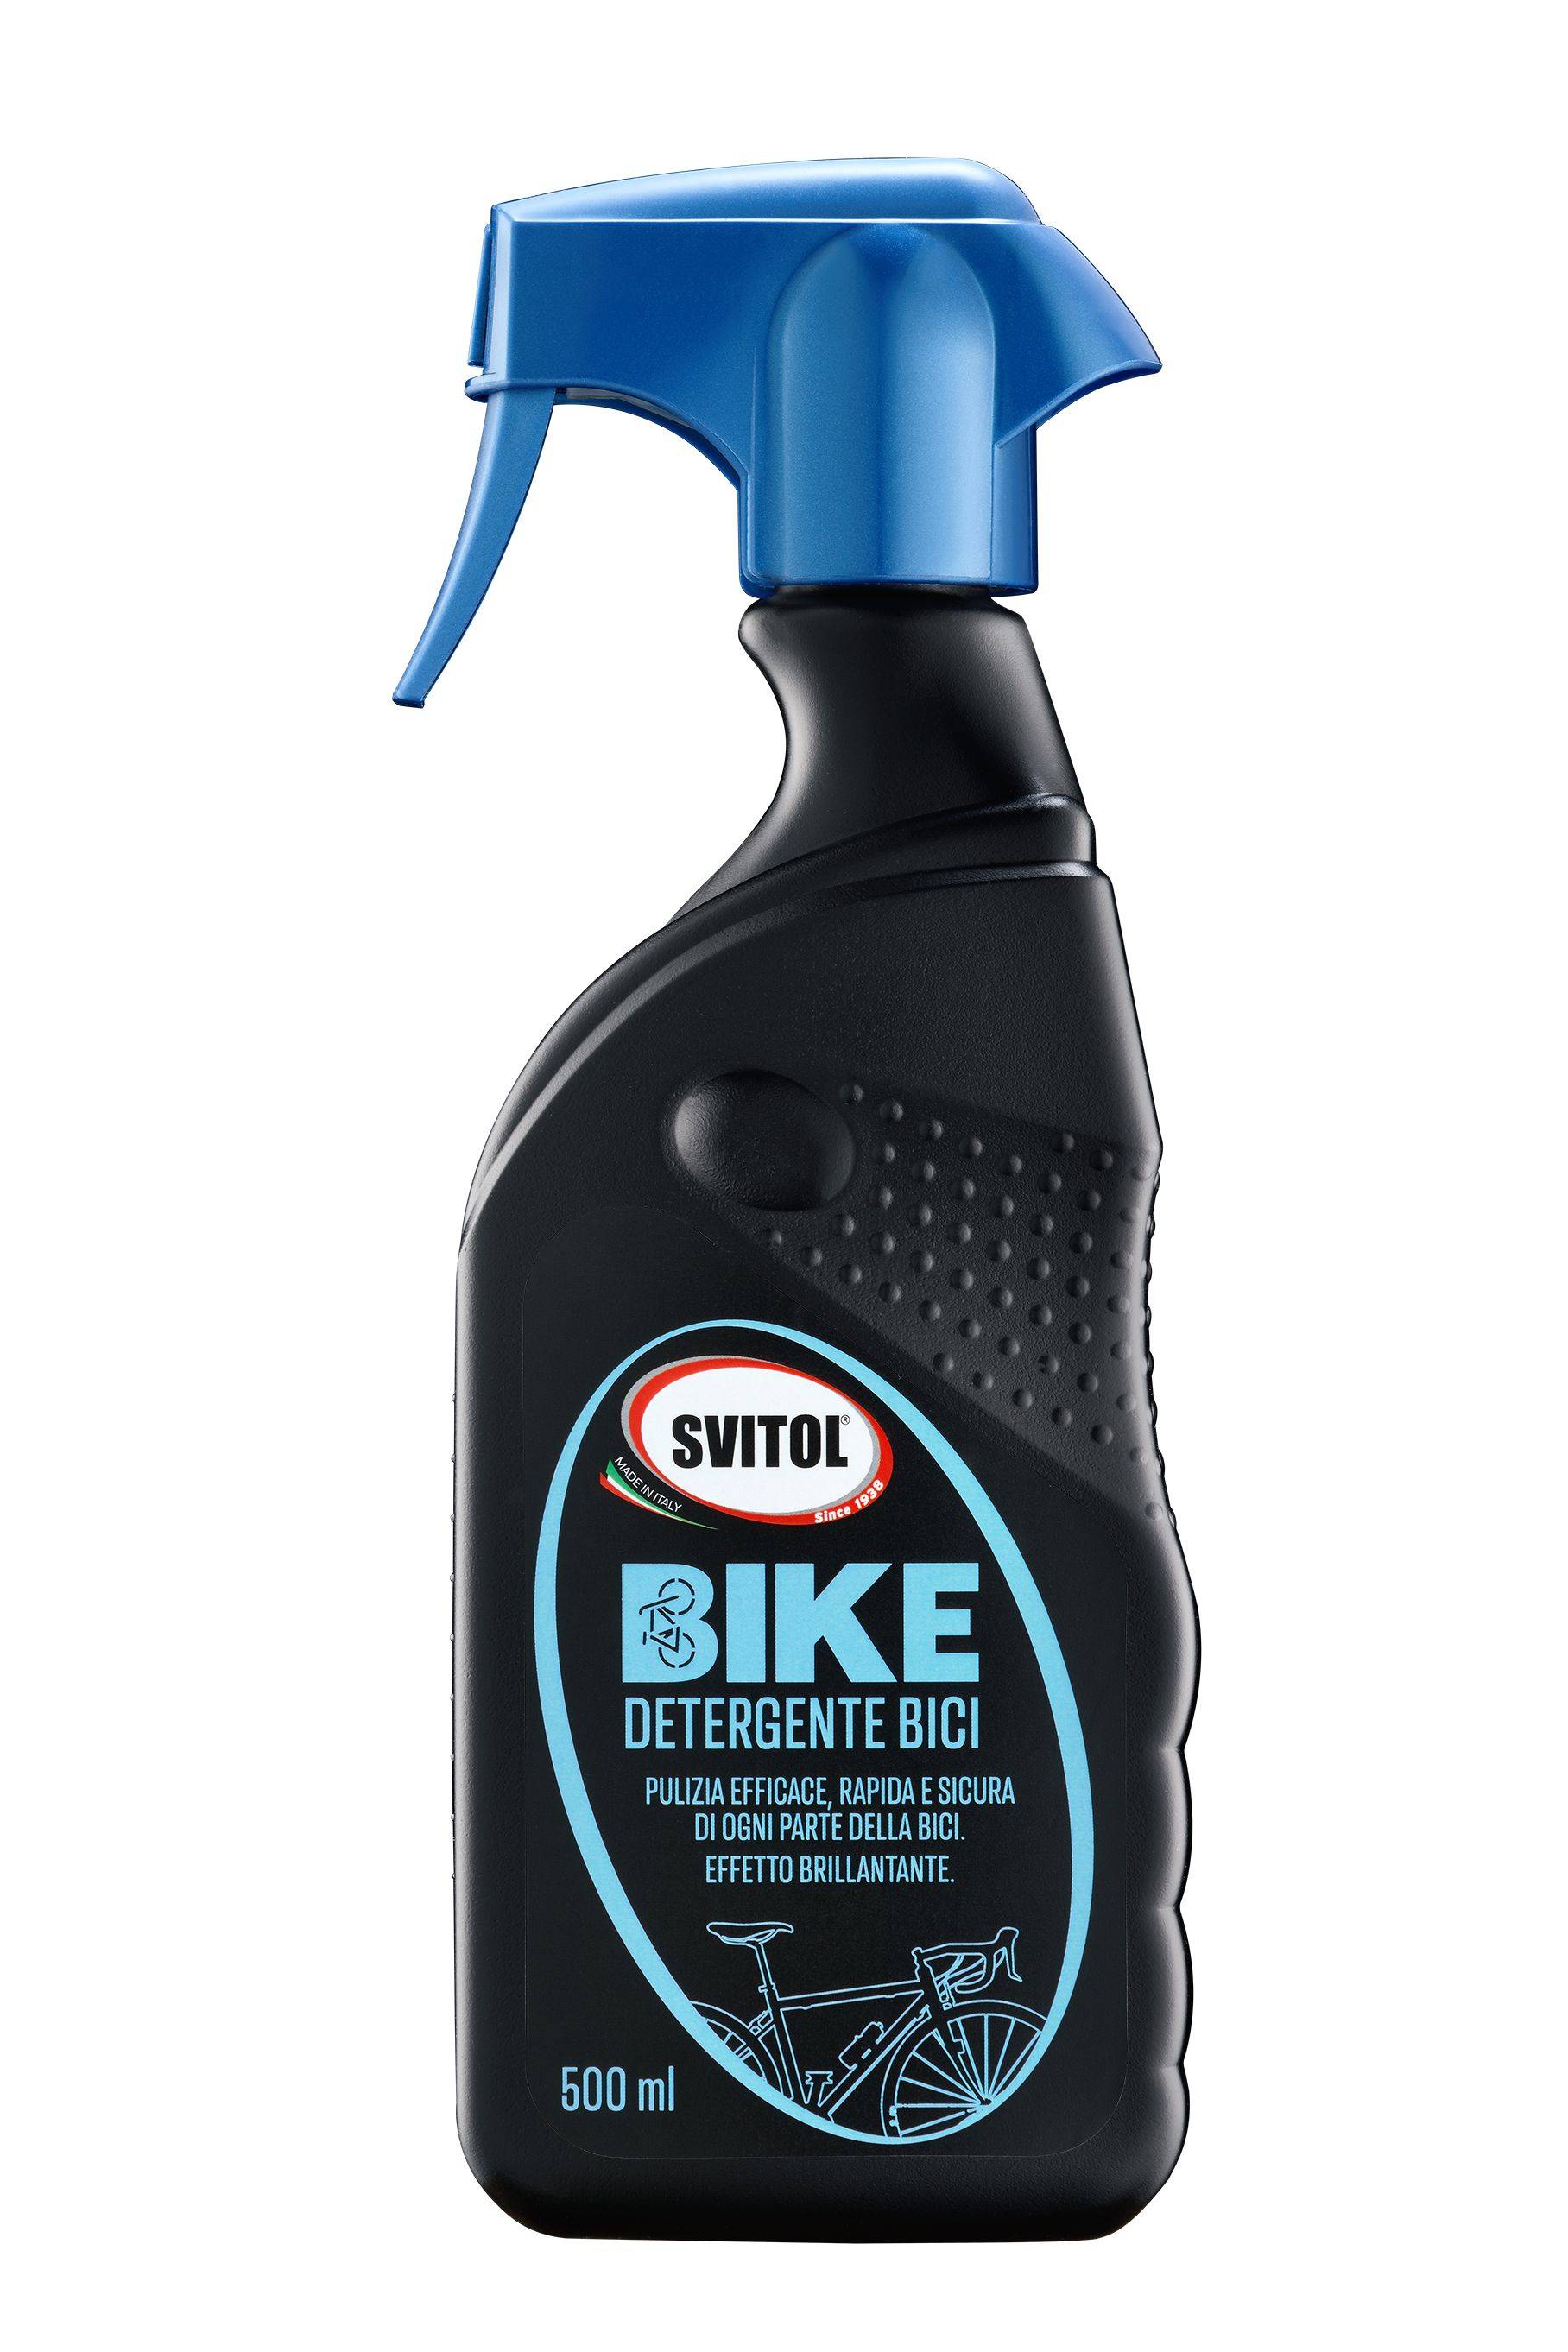 Svitol Bike – Detergente bici 500 ml